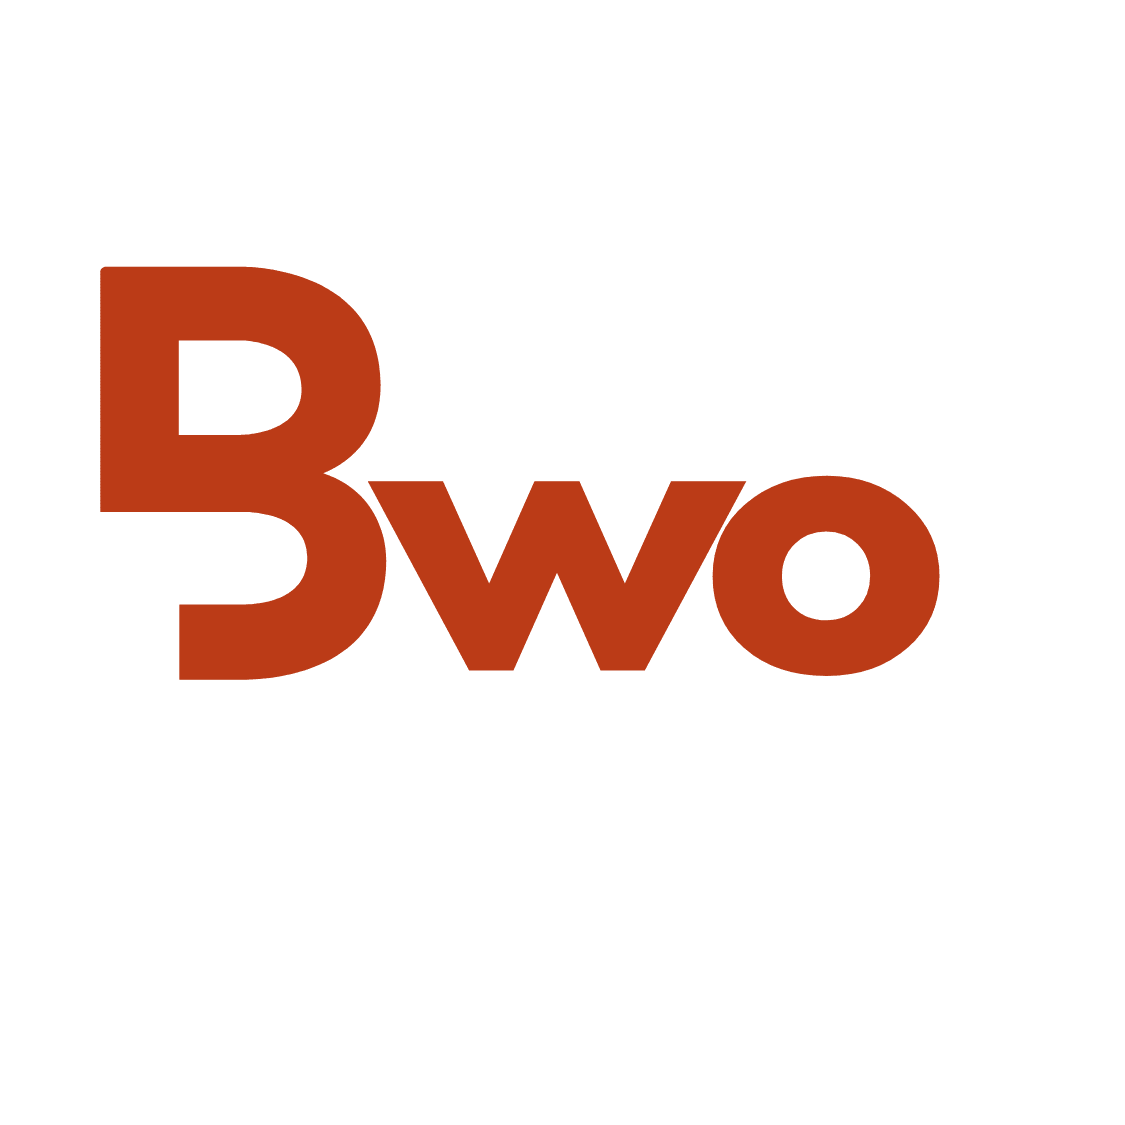 Bwo company logo